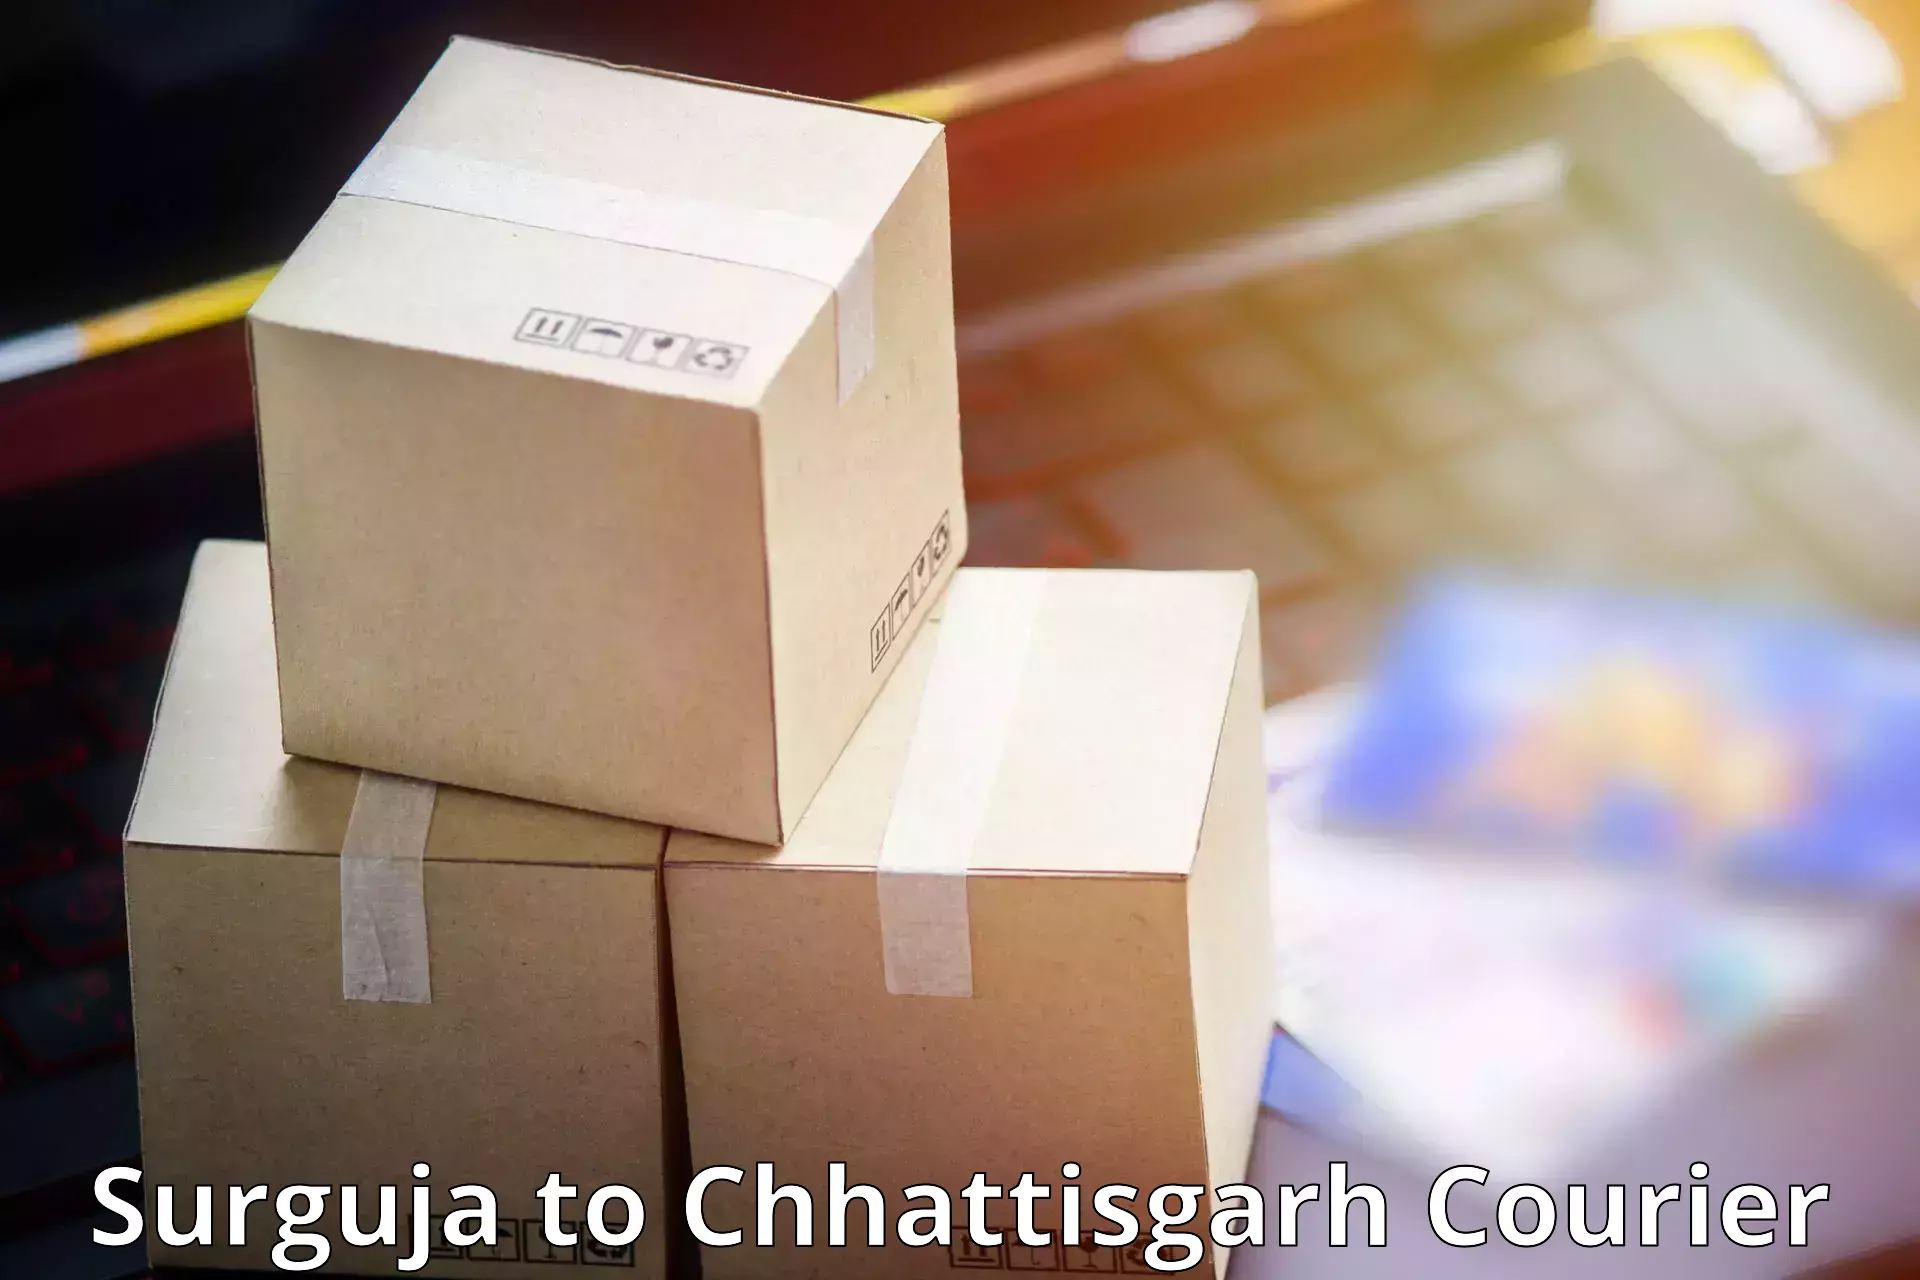 Express mail service Surguja to Korea Chhattisgarh